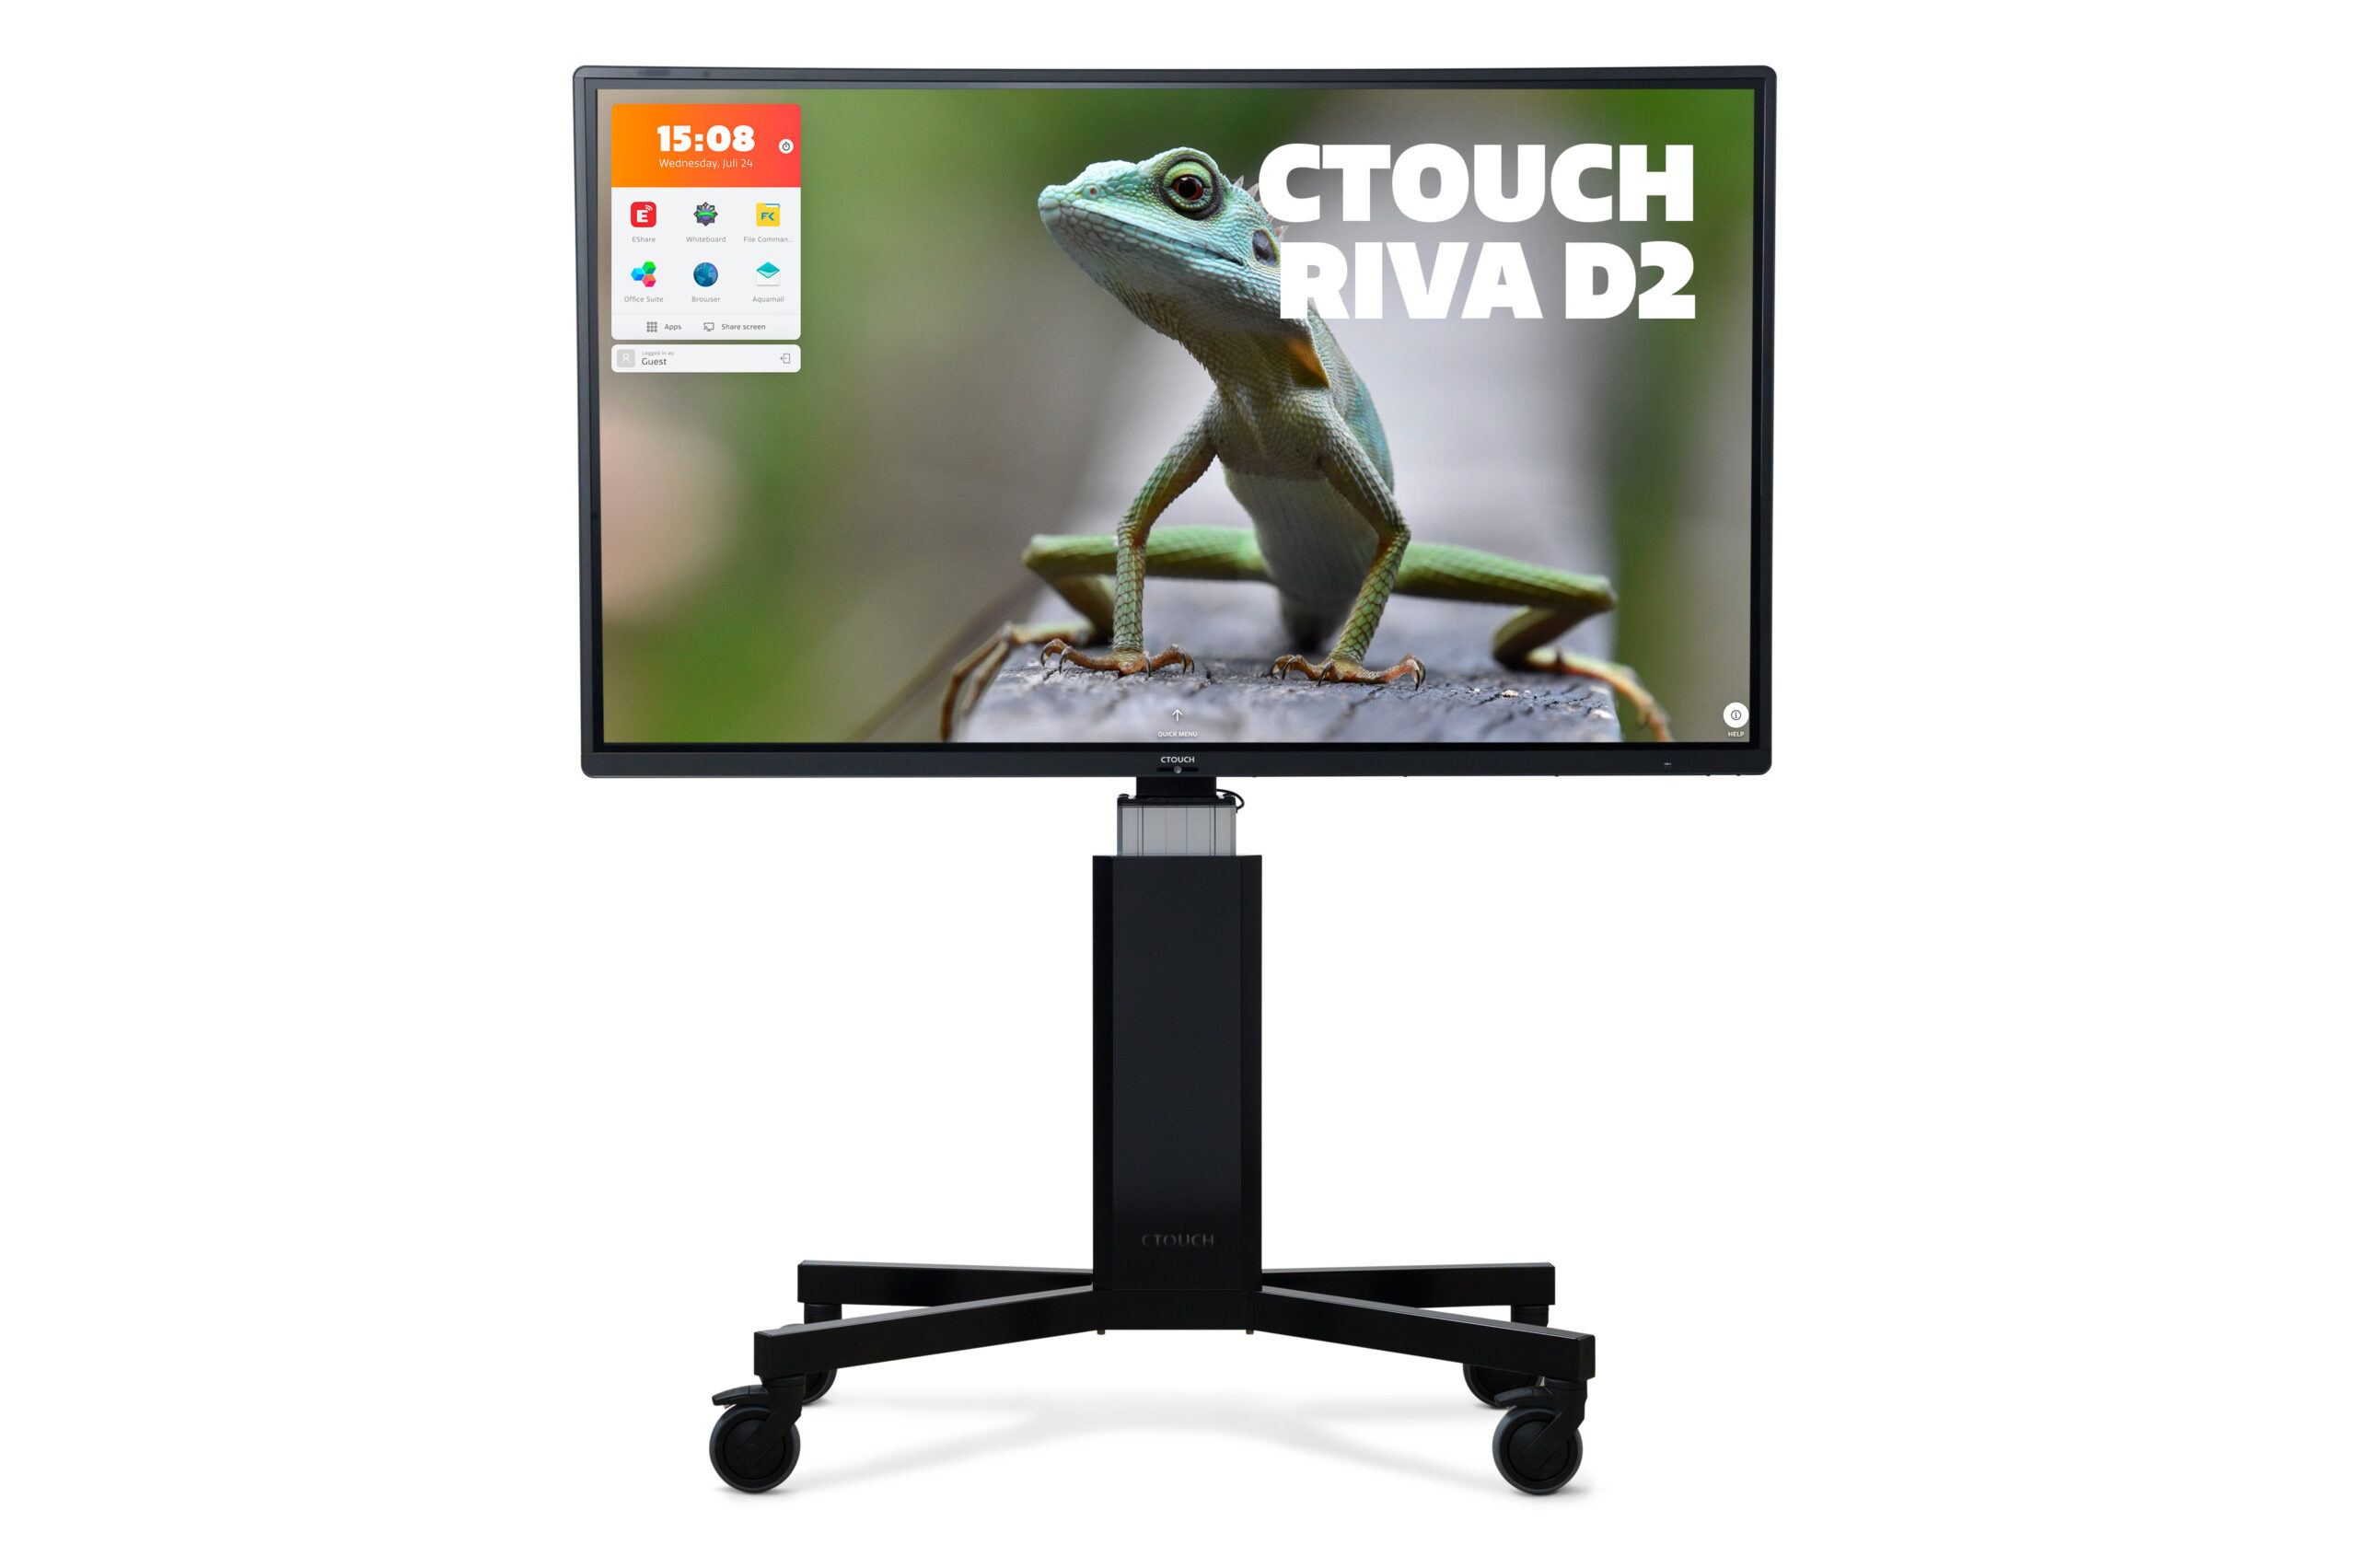 CTOUCH Riva D2 touchscreen digibord nieuw kopen belgie